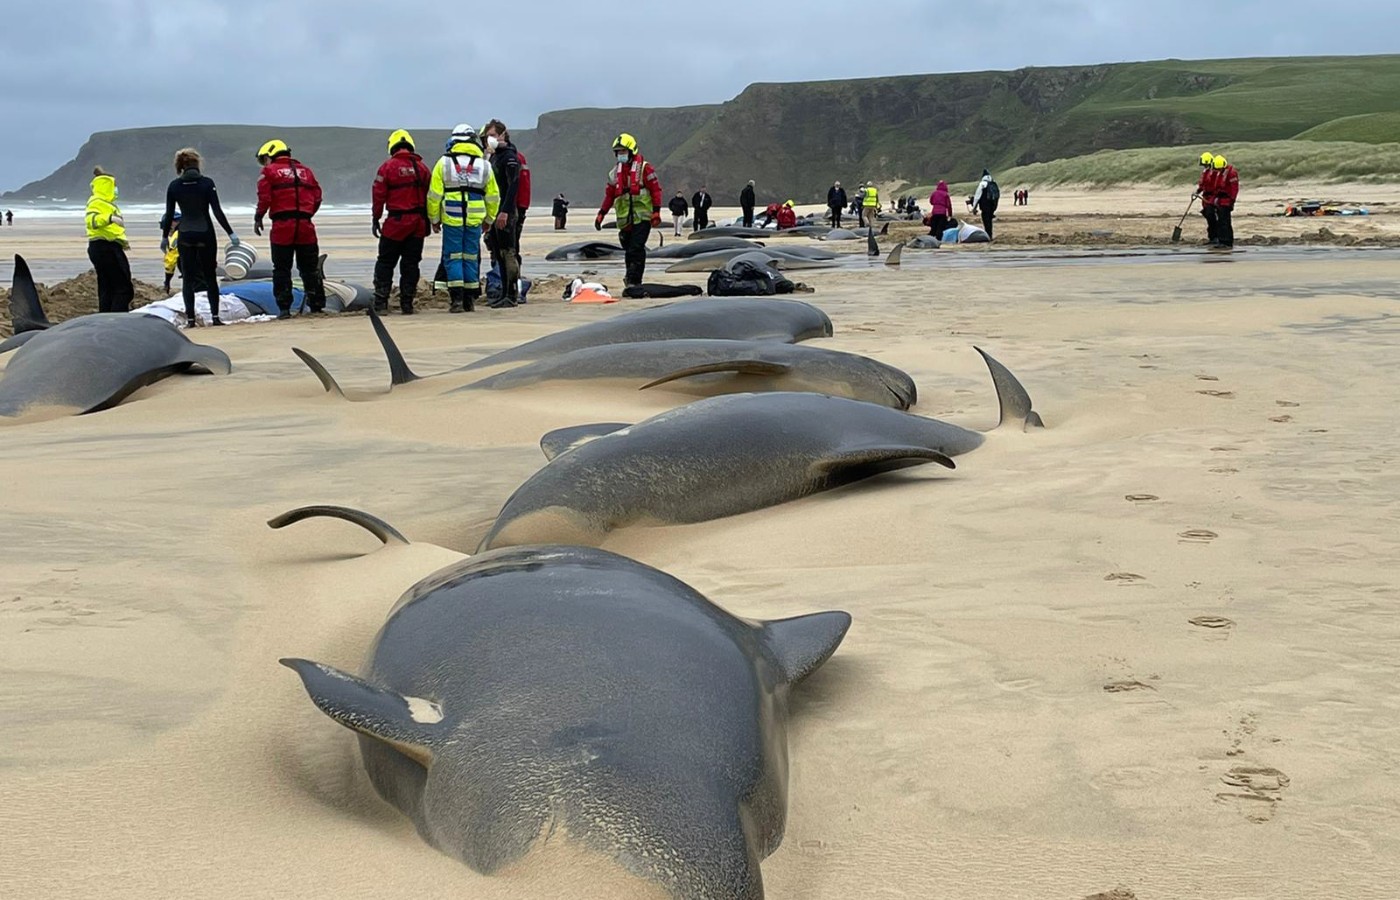 Pilot Whales Stranded On Australian Beach, More Than 50 Dead